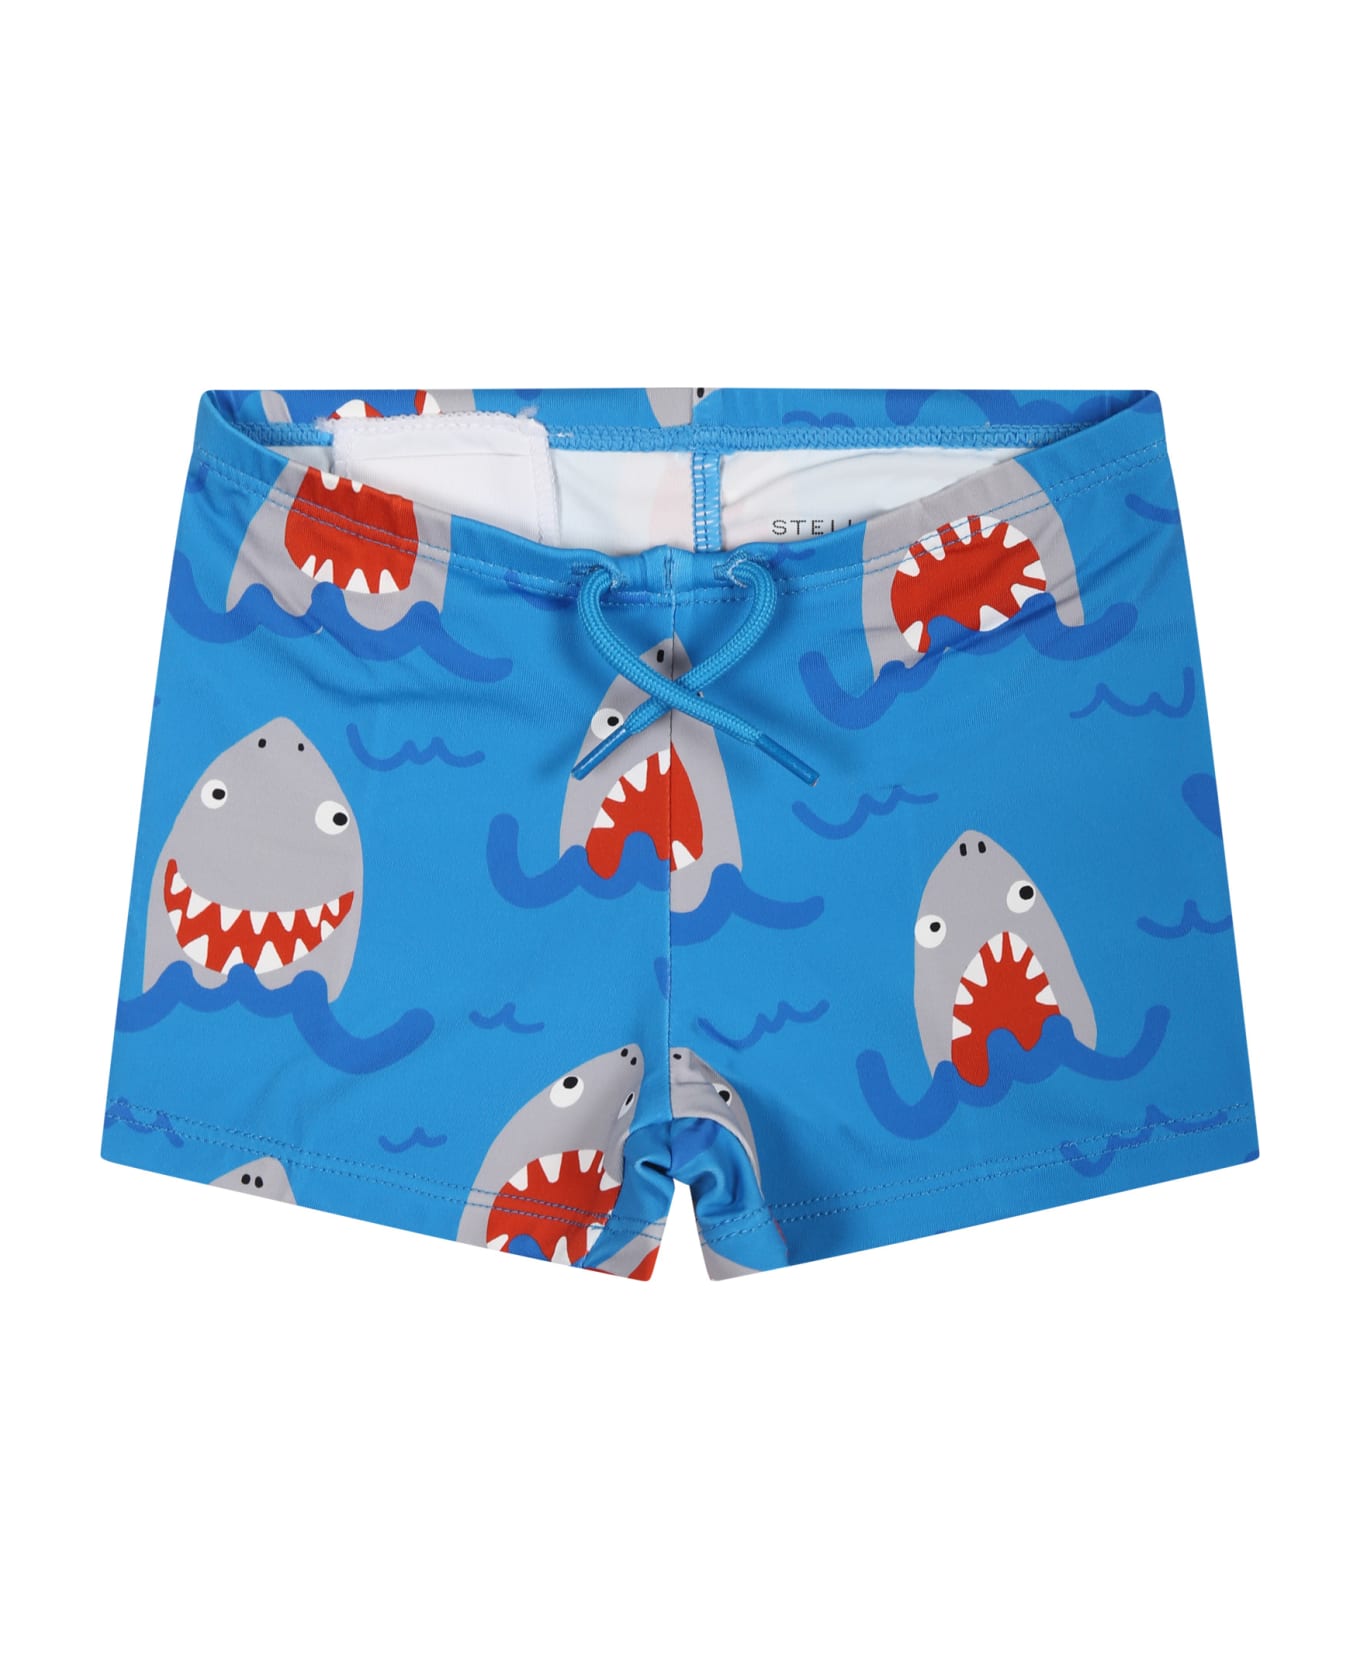 Stella McCartney Light Blue Boxer Shorts For Baby Boy With All-over Shark Print - Celeste 水着